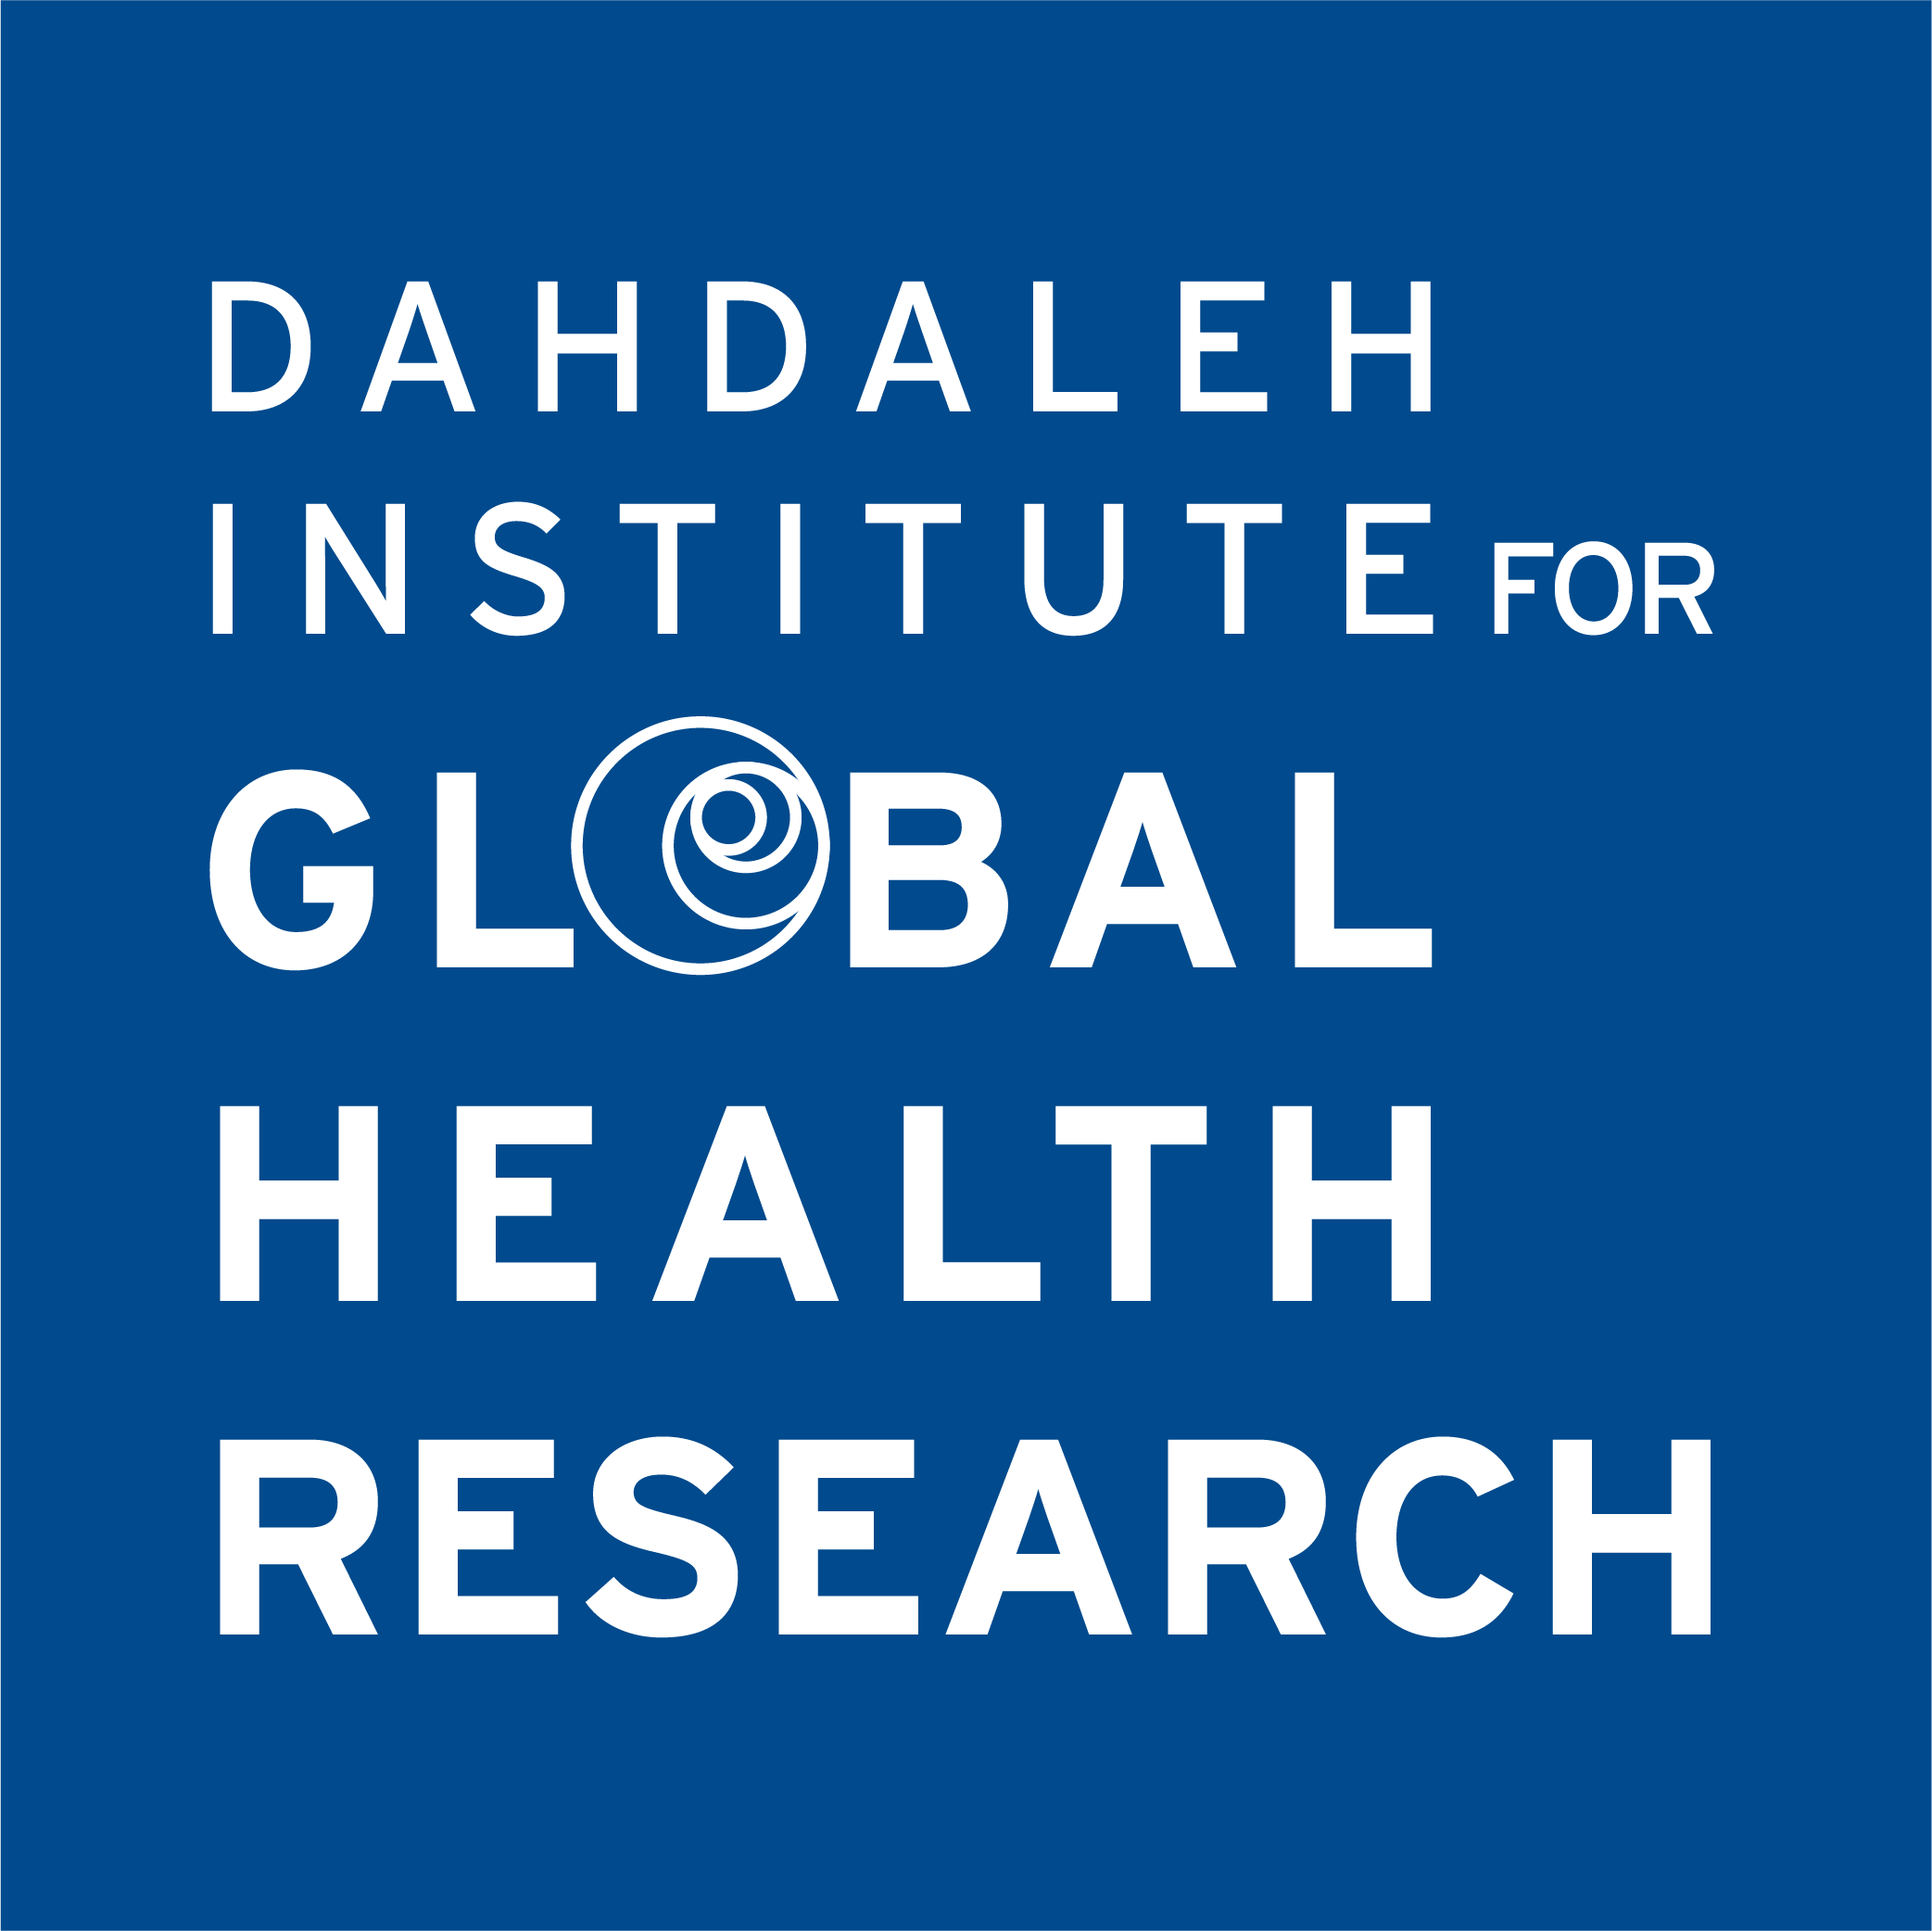 Dahdaleh Institute for Global Health Research